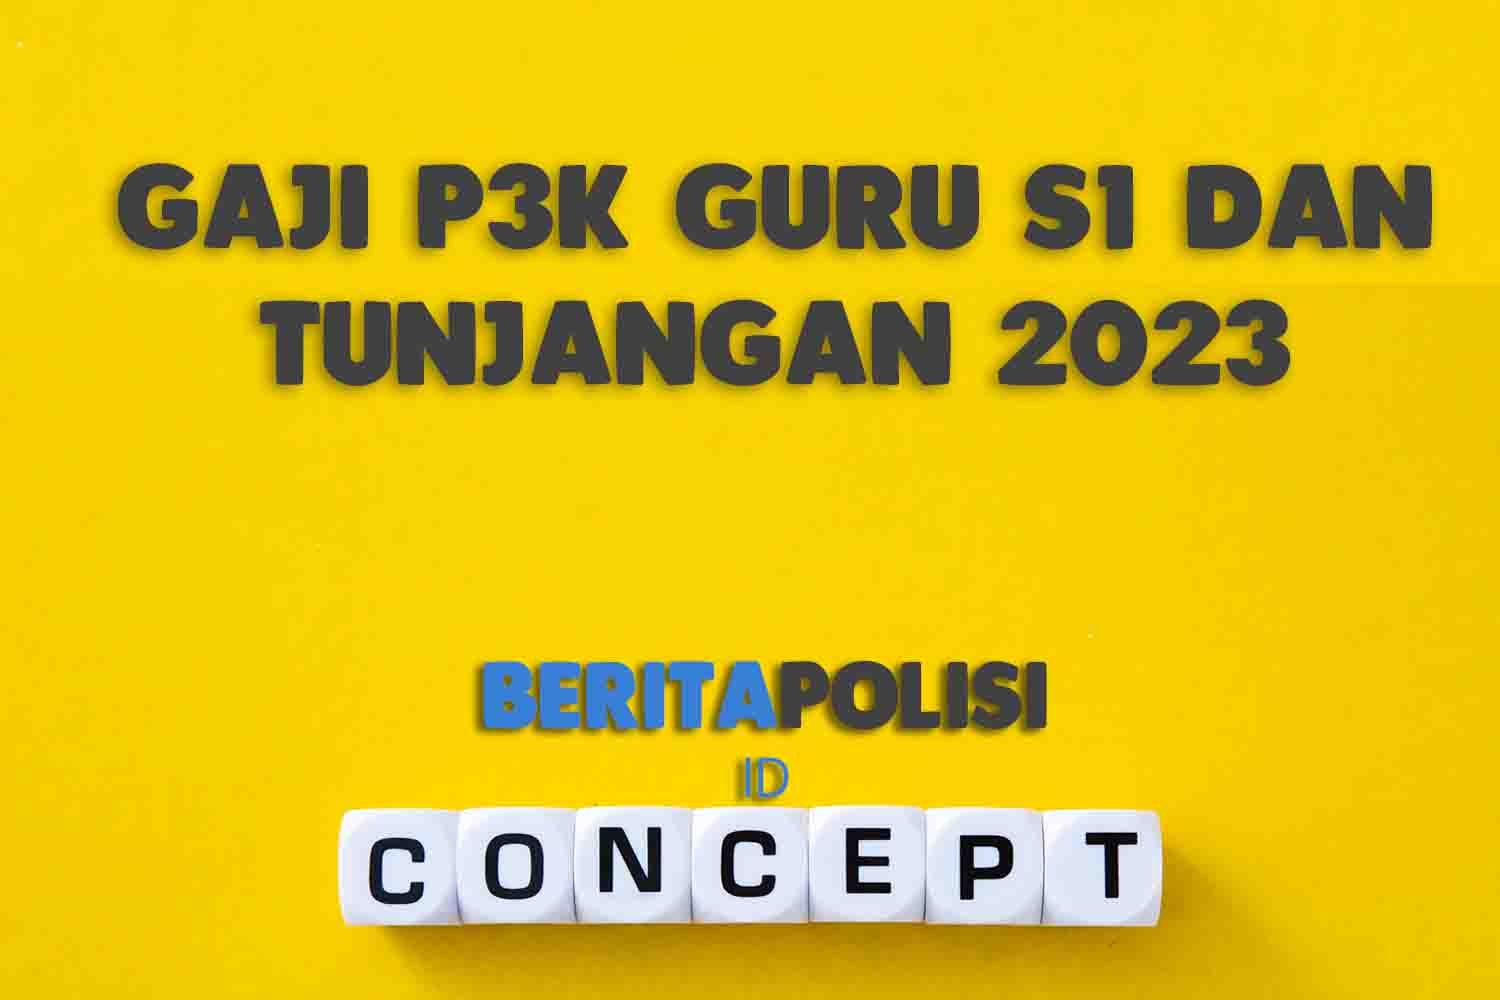 Gaji P3K Guru S1 Dan Tunjangan 2023